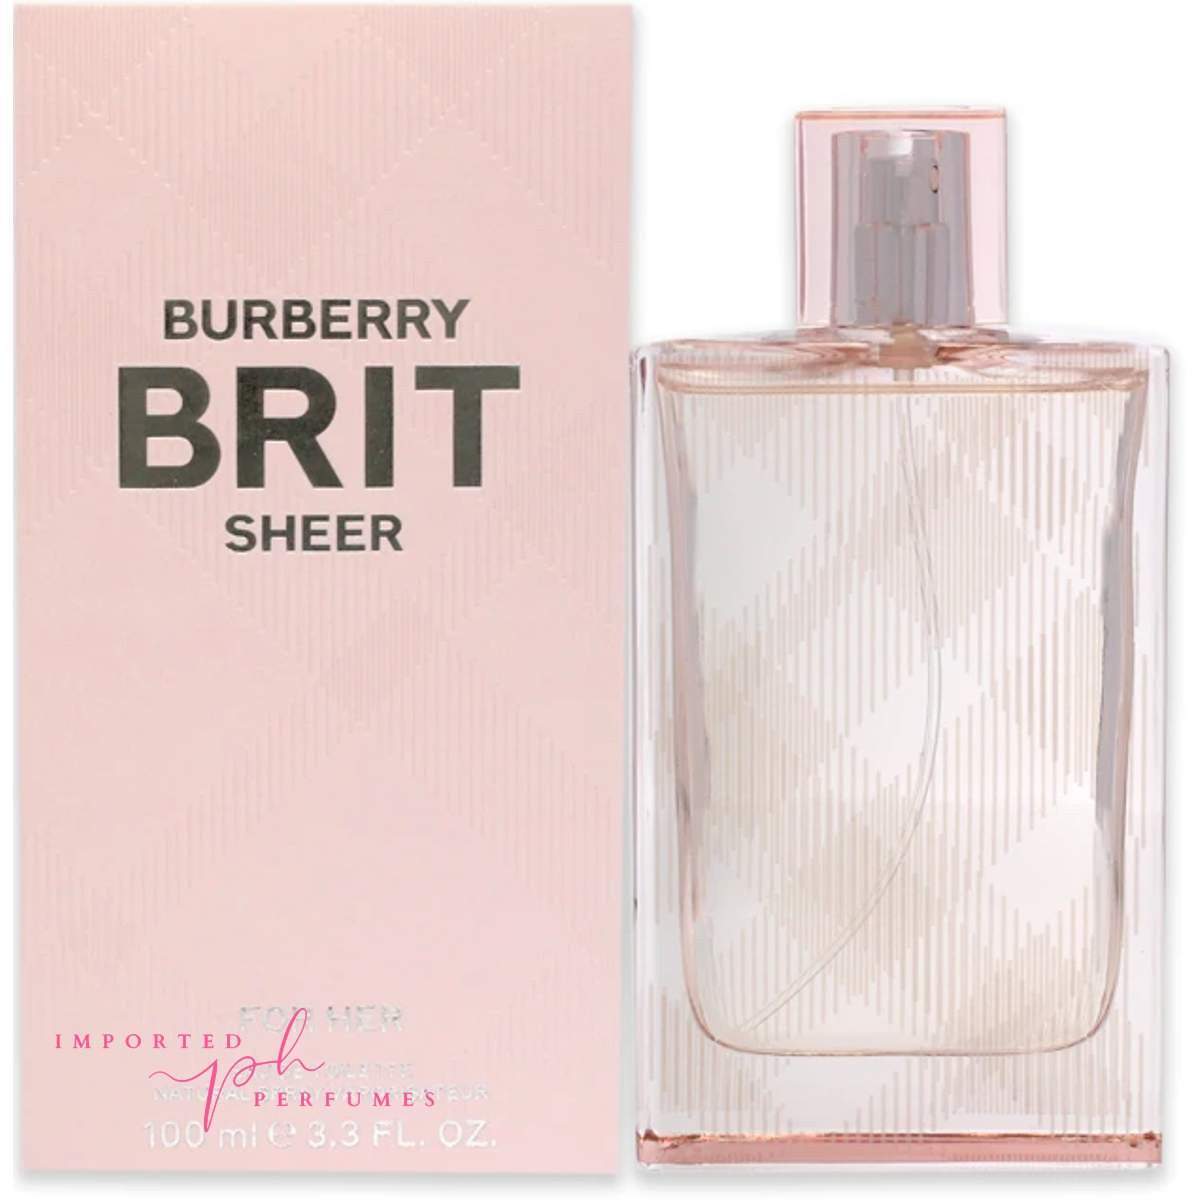 BURBERRY Brit Sheer Eau de Toilette For Her 100ml-Imported Perfumes Co-100ml,200ml,brit,burberry,women